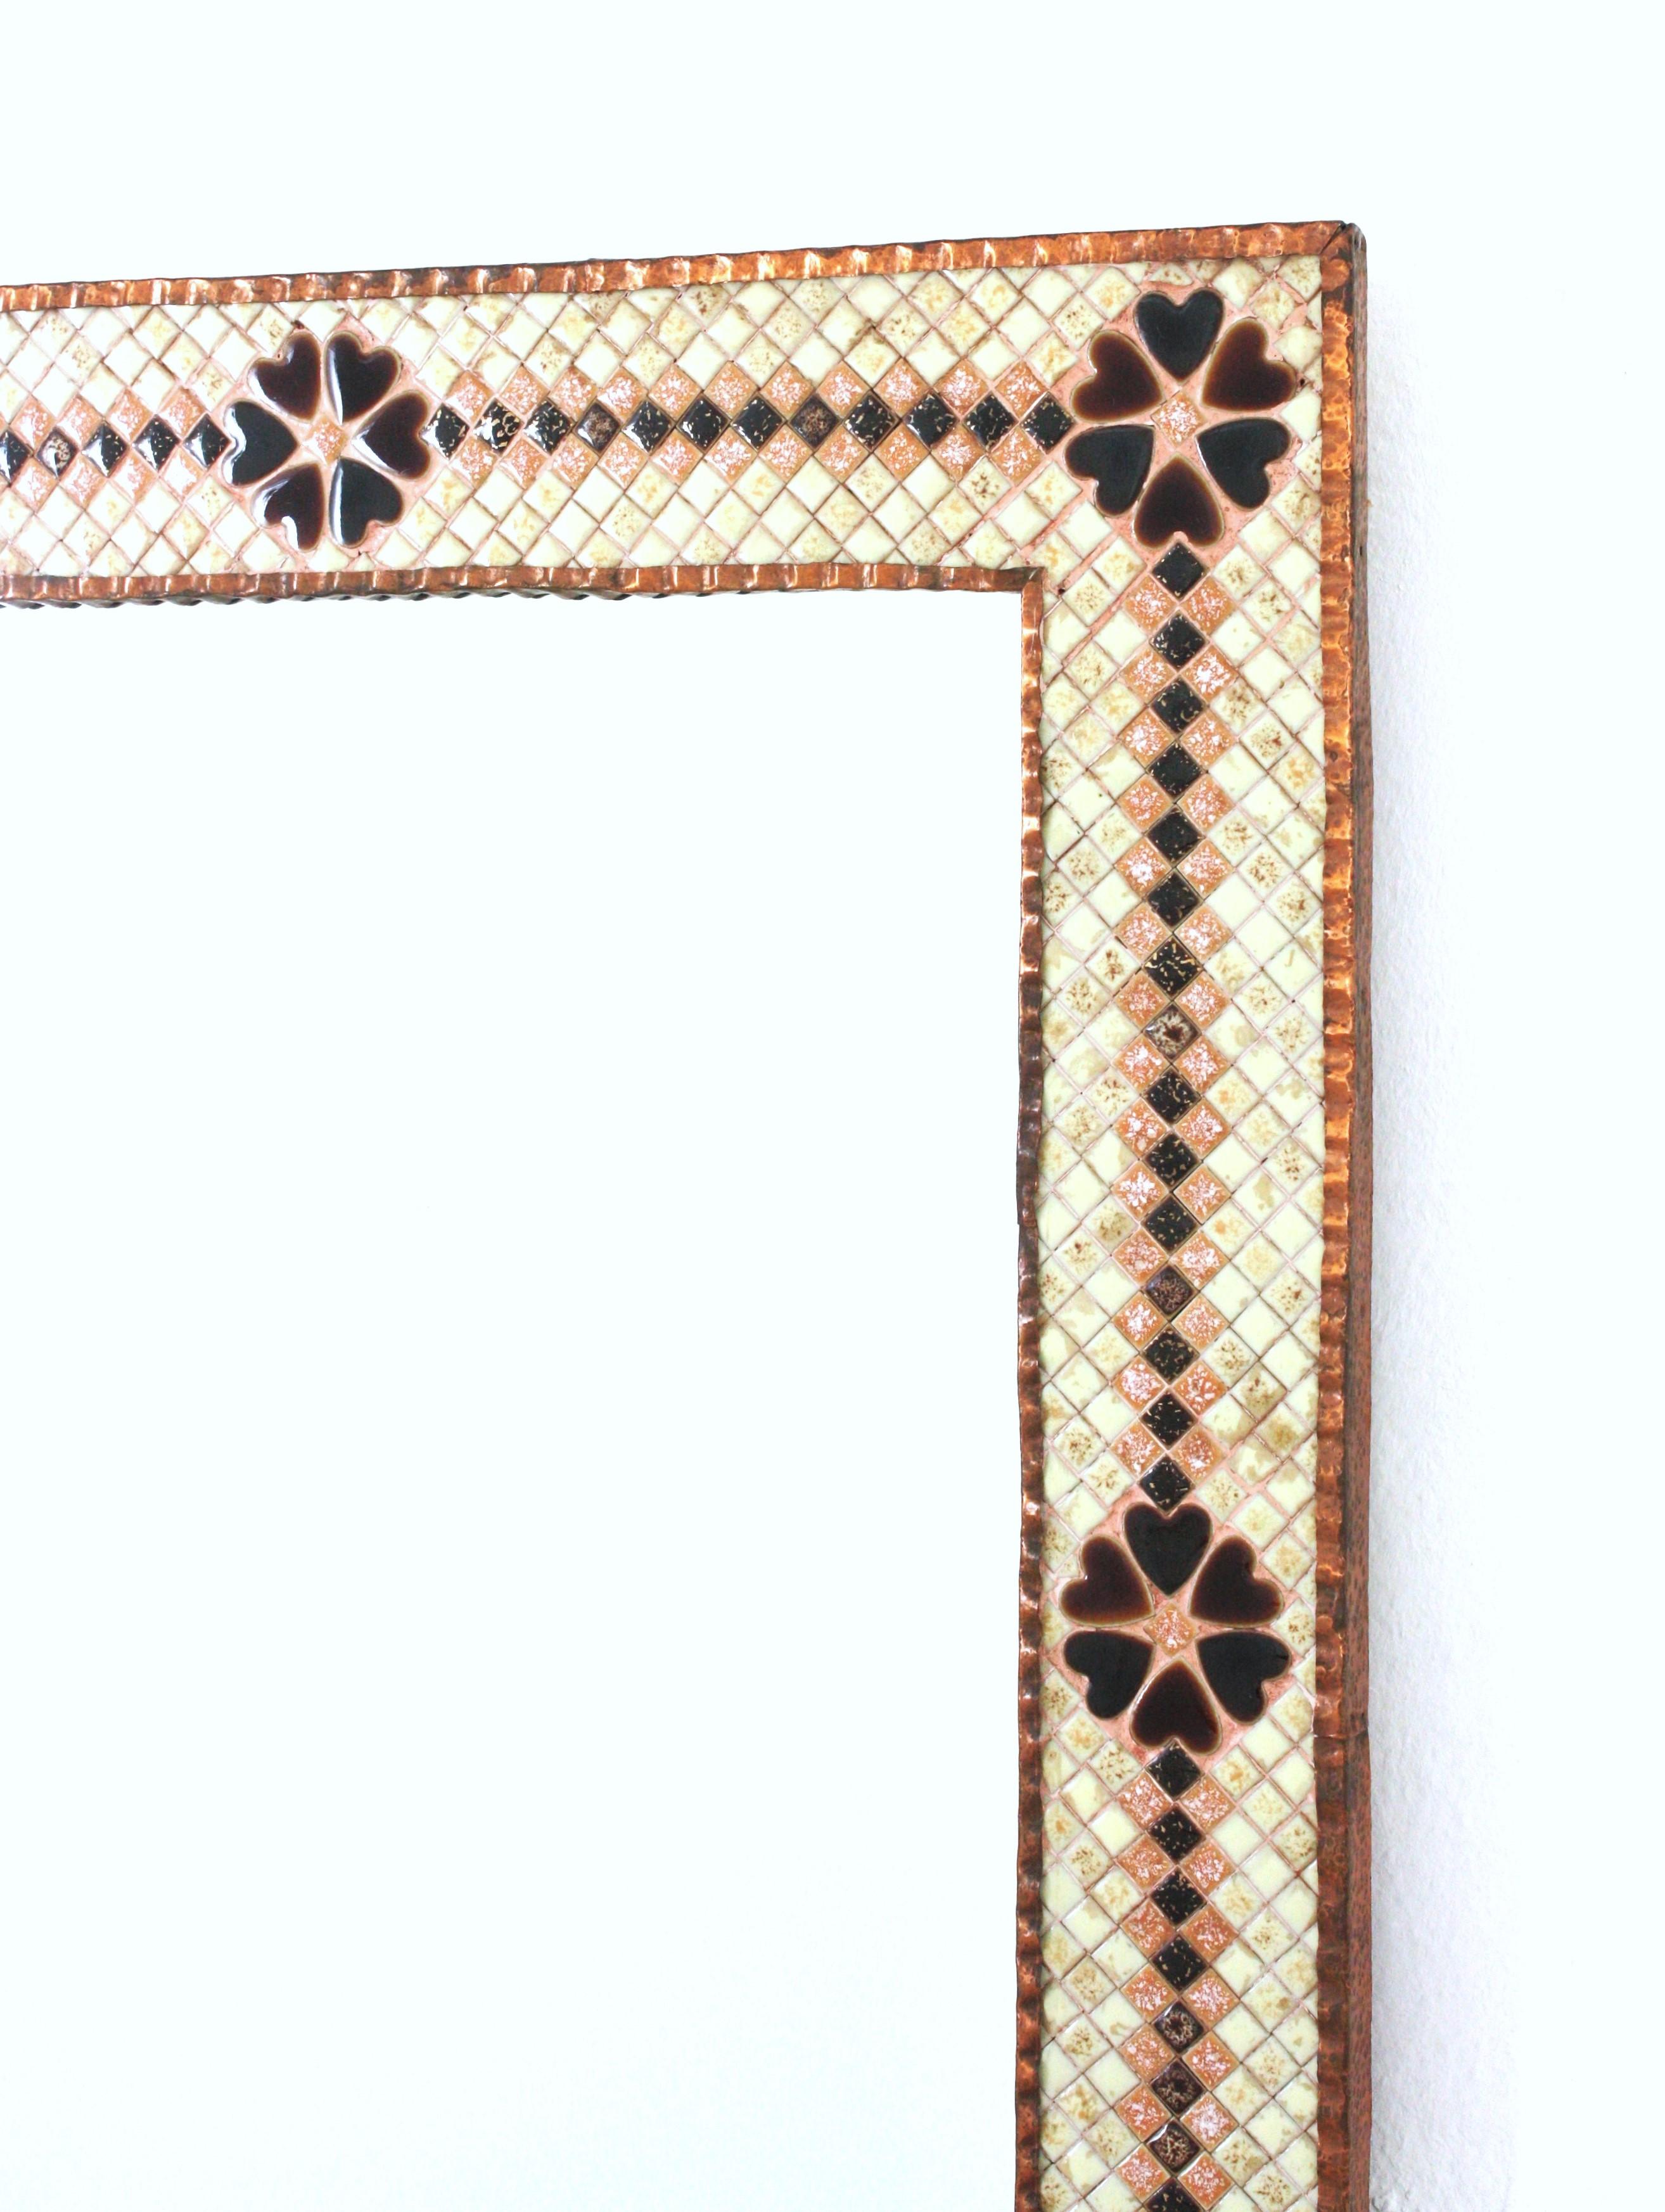 Spanish Tile Mosaic Rectangular Mirror in Glazed Ceramic, 1950s For Sale 2